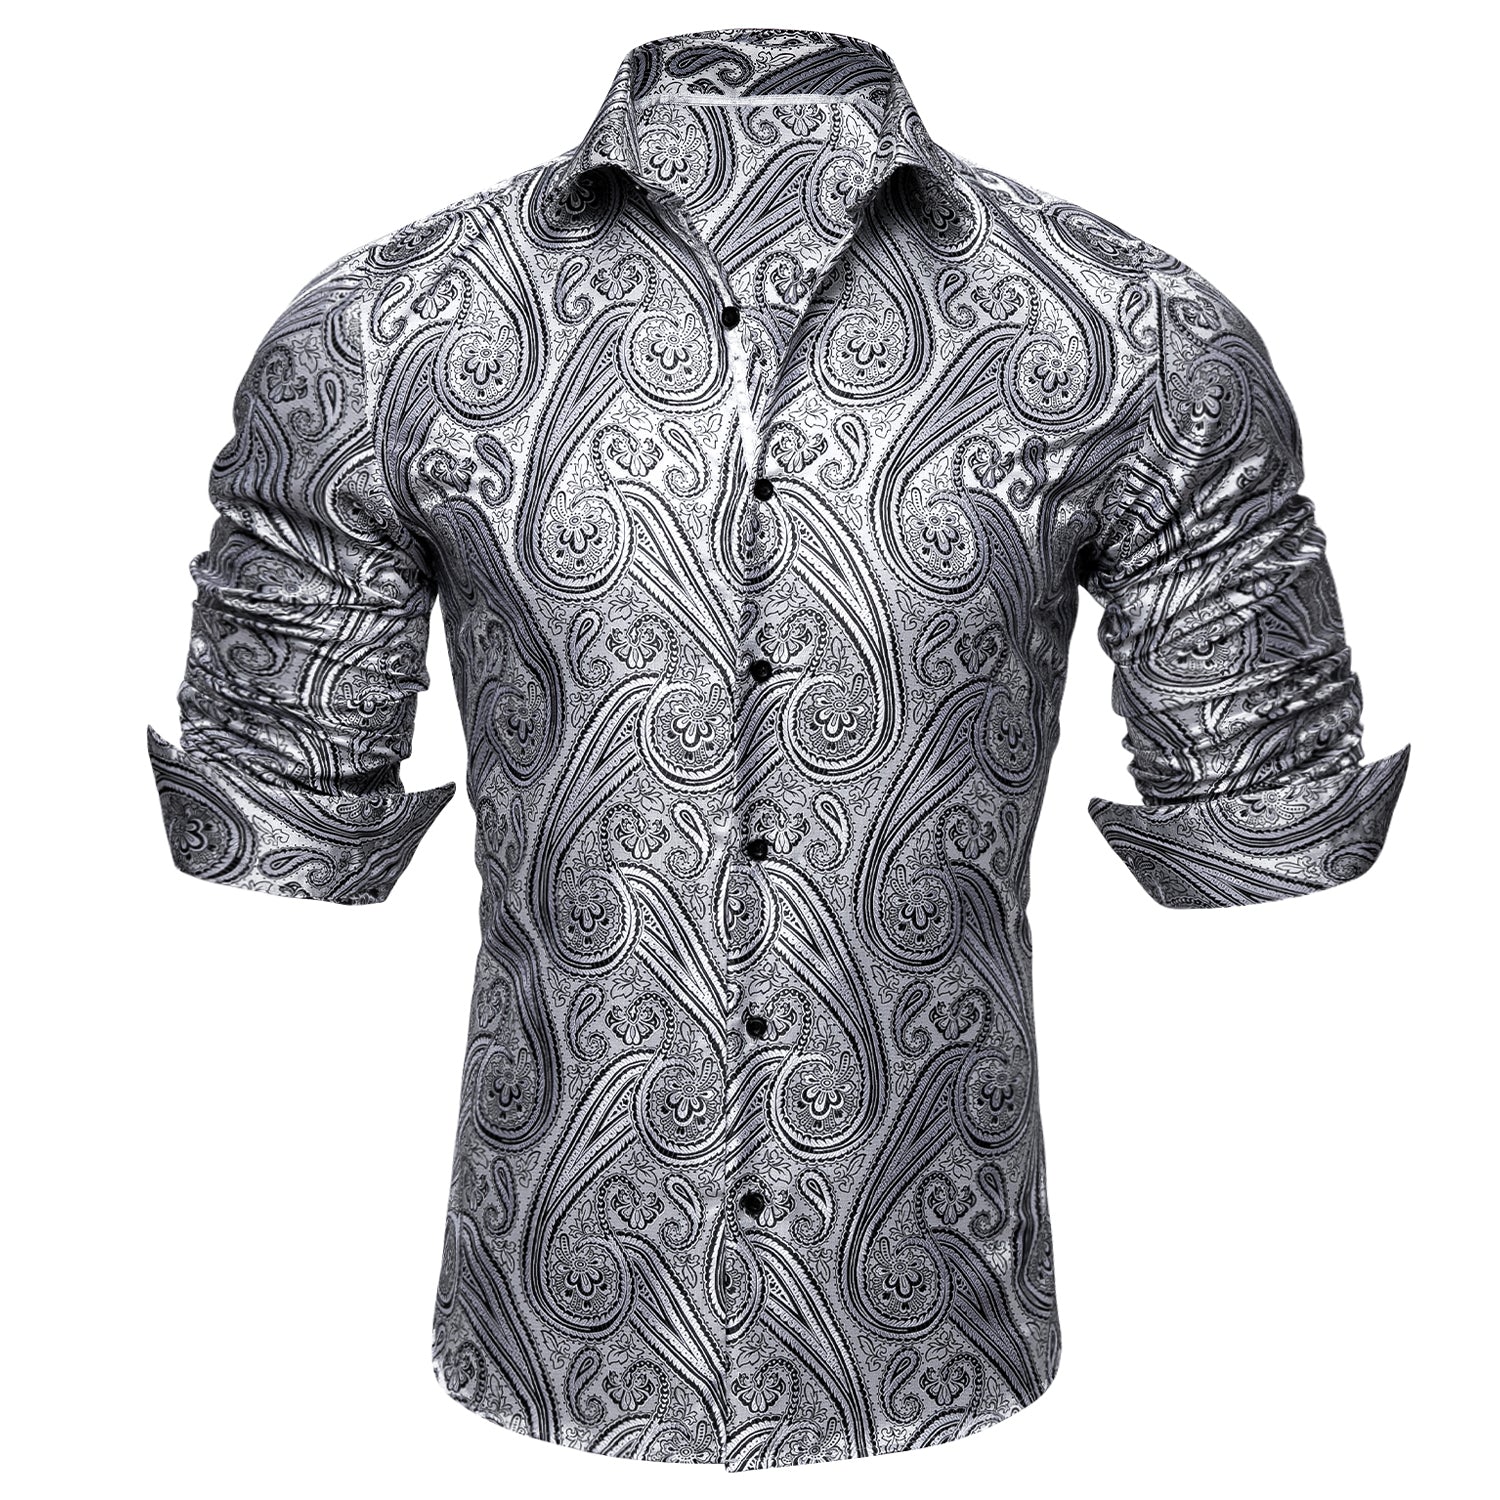 Barry.wang Button Down Shirt Silver Silk Tribal Long Sleeve Paisley Shirt for Mens